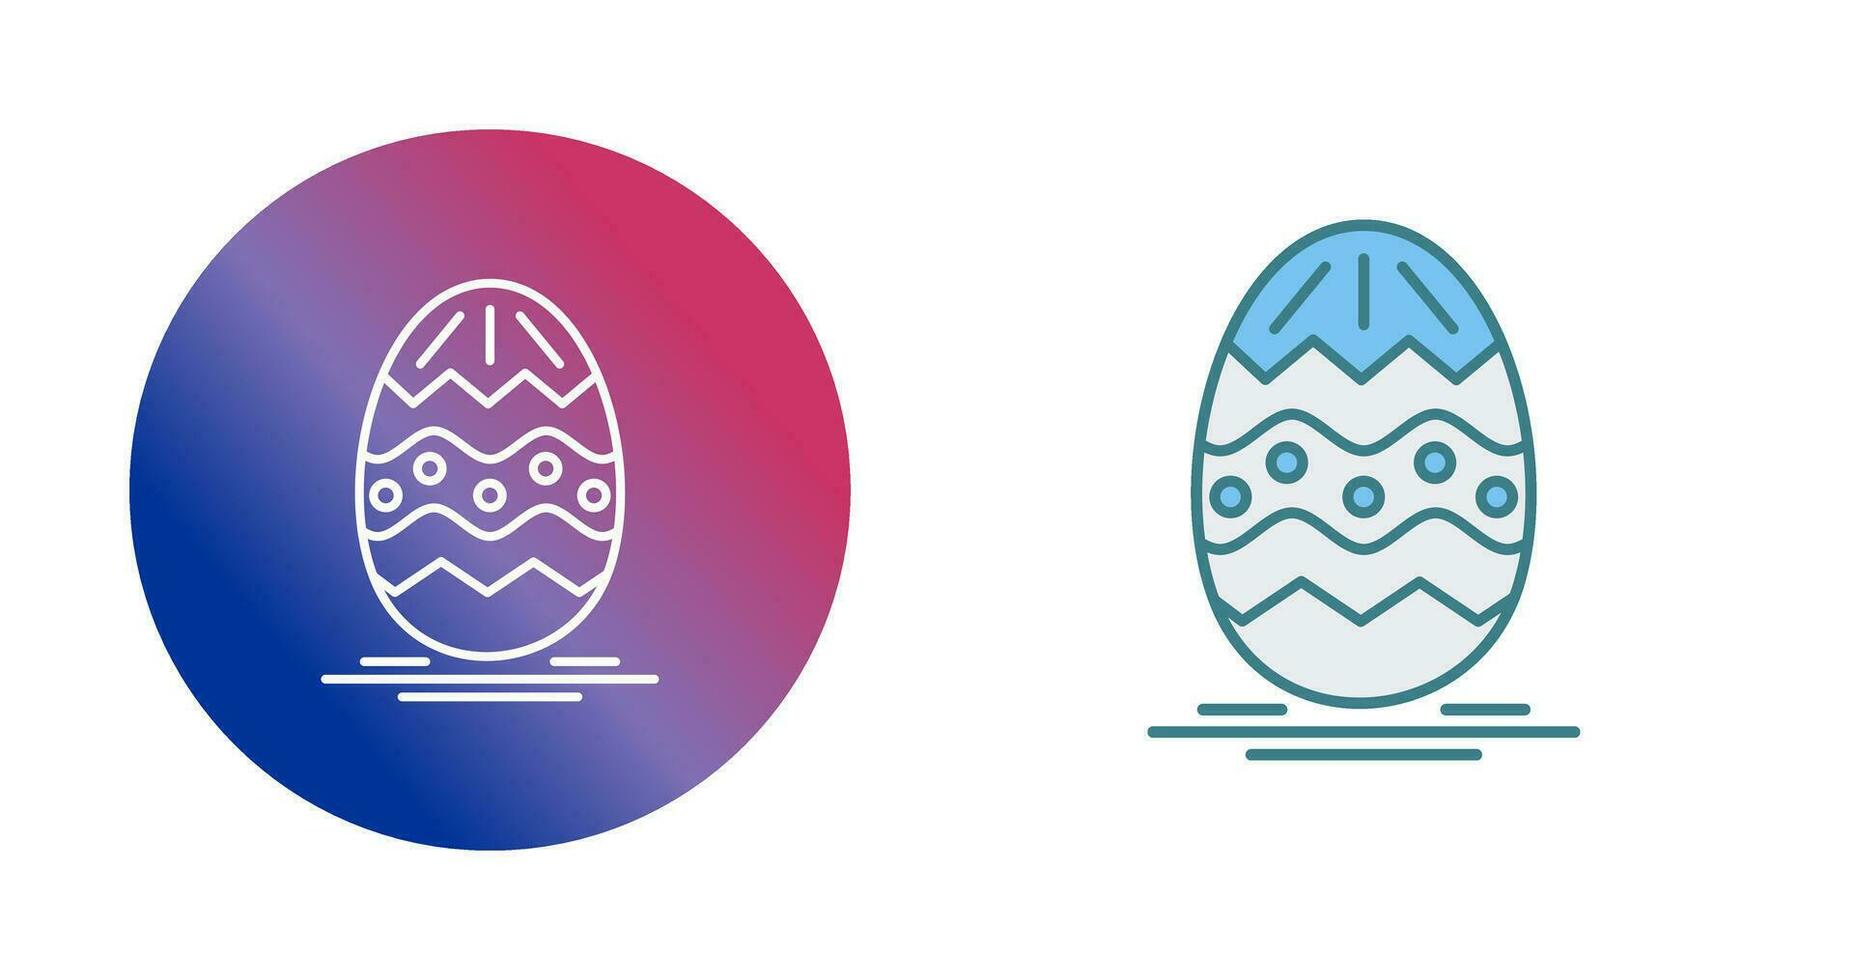 Easter Egg Vector Icon